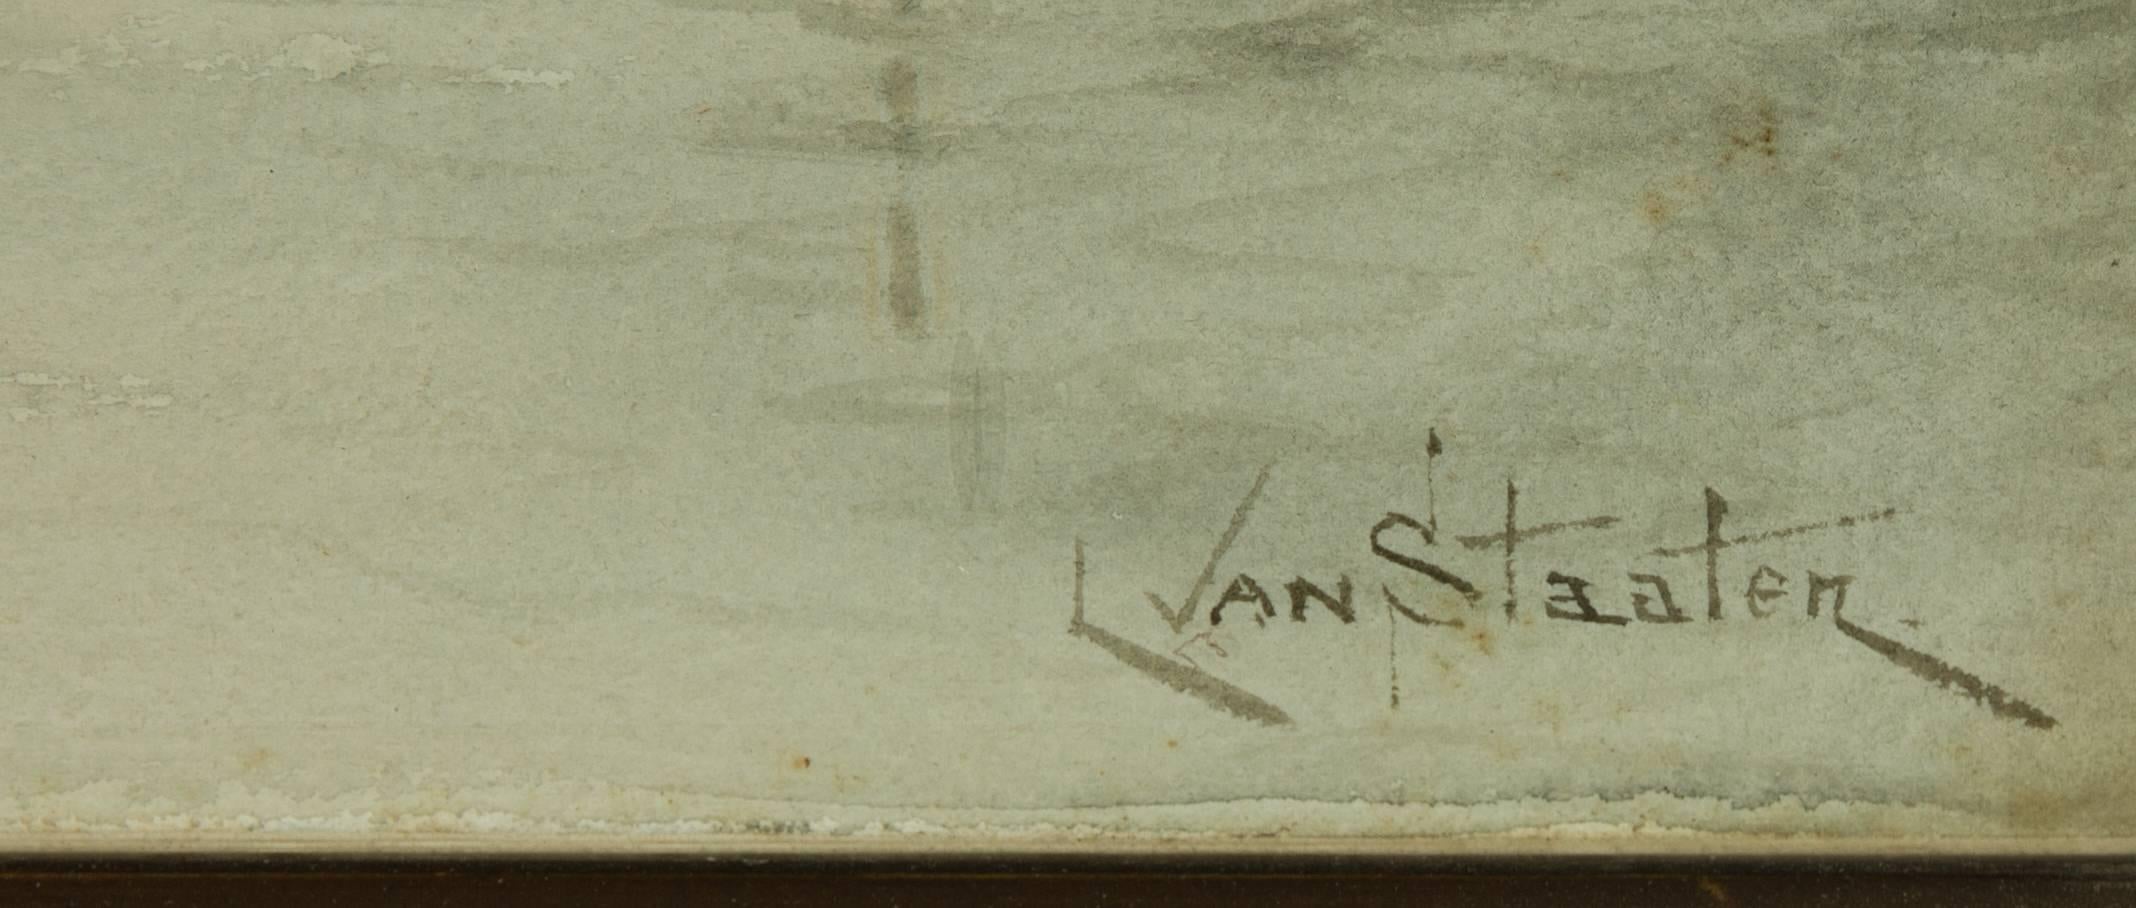 Louis Van Staaten - Signed 19th Century Dutch Watercolour, Dutch Canal Scene 1